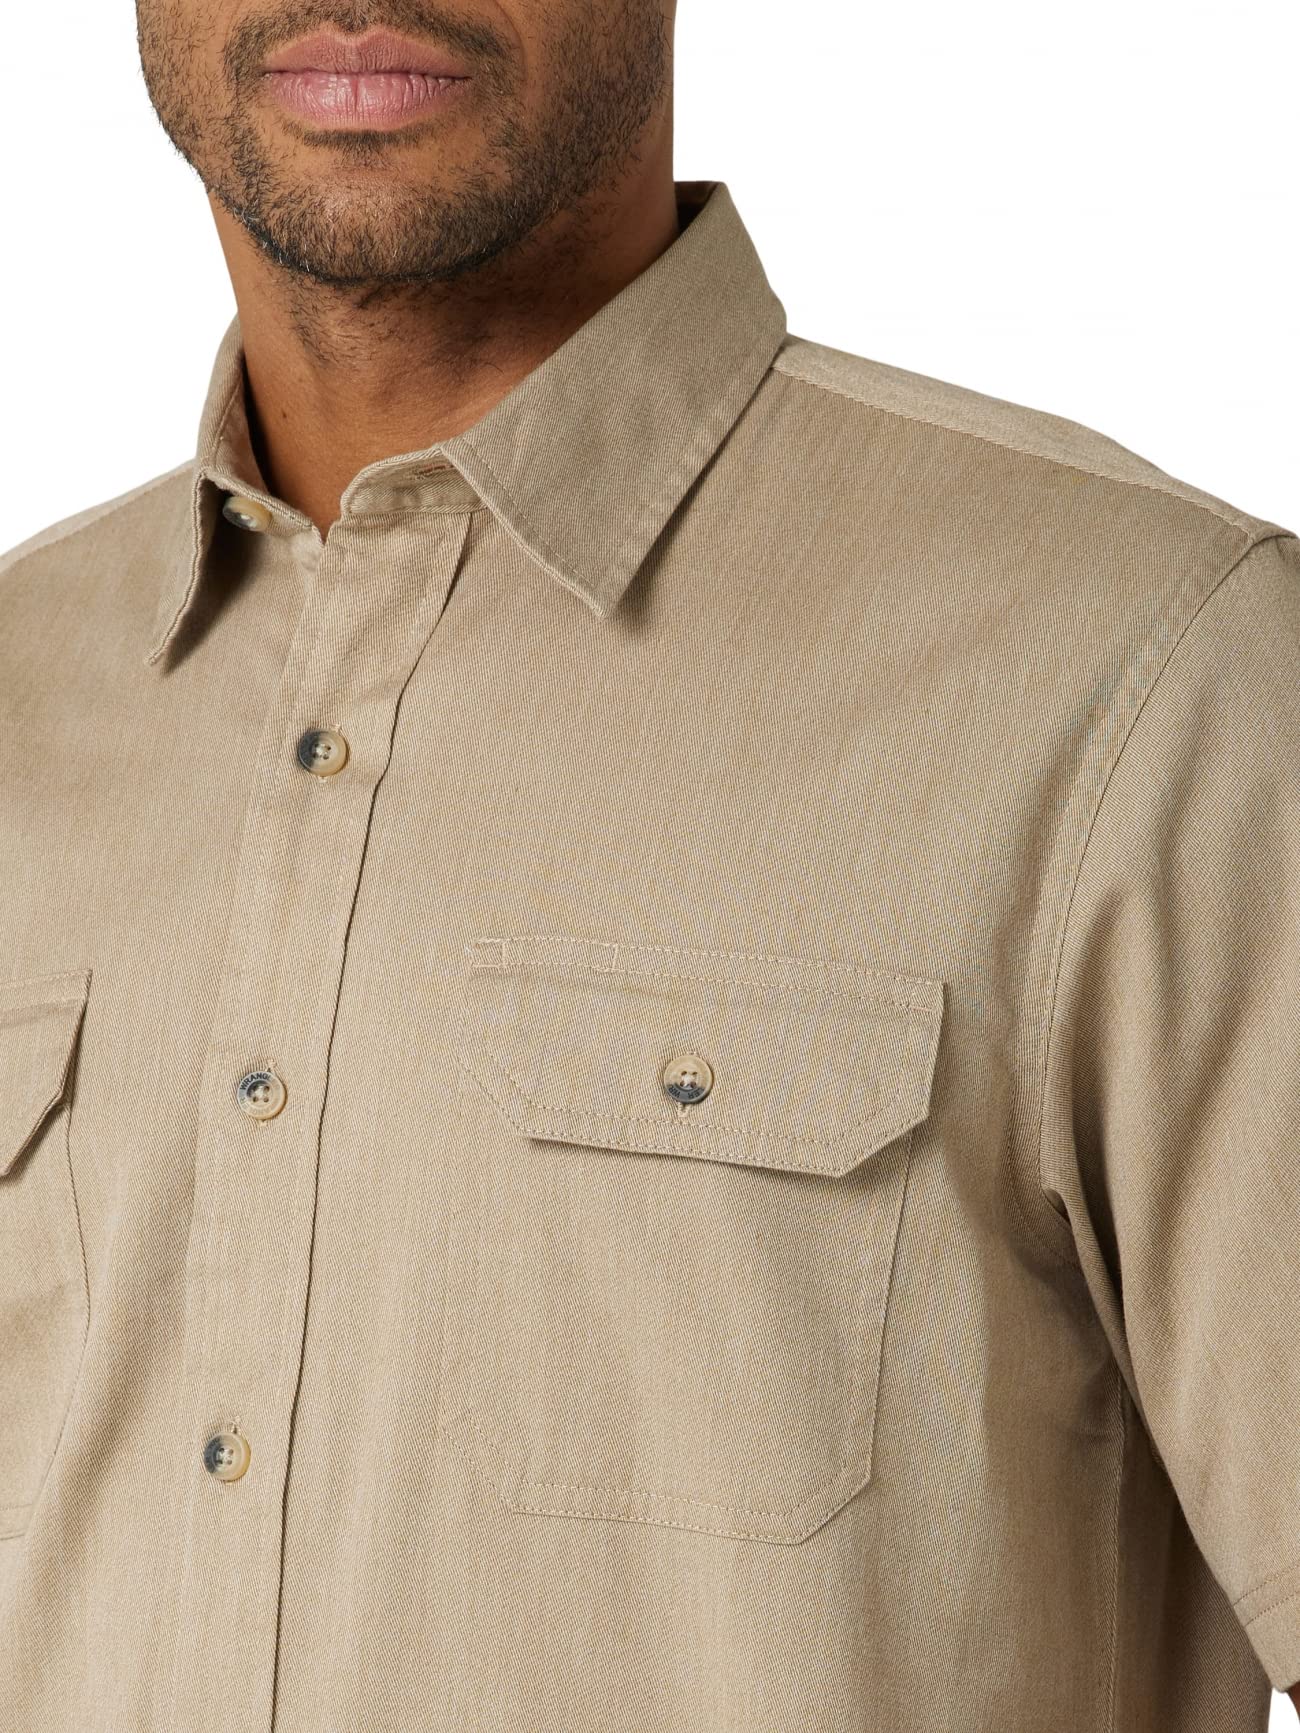 Wrangler Authentics mens Short Sleeve Classic Woven Button Down Shirt, Elmwood Heather, Medium US